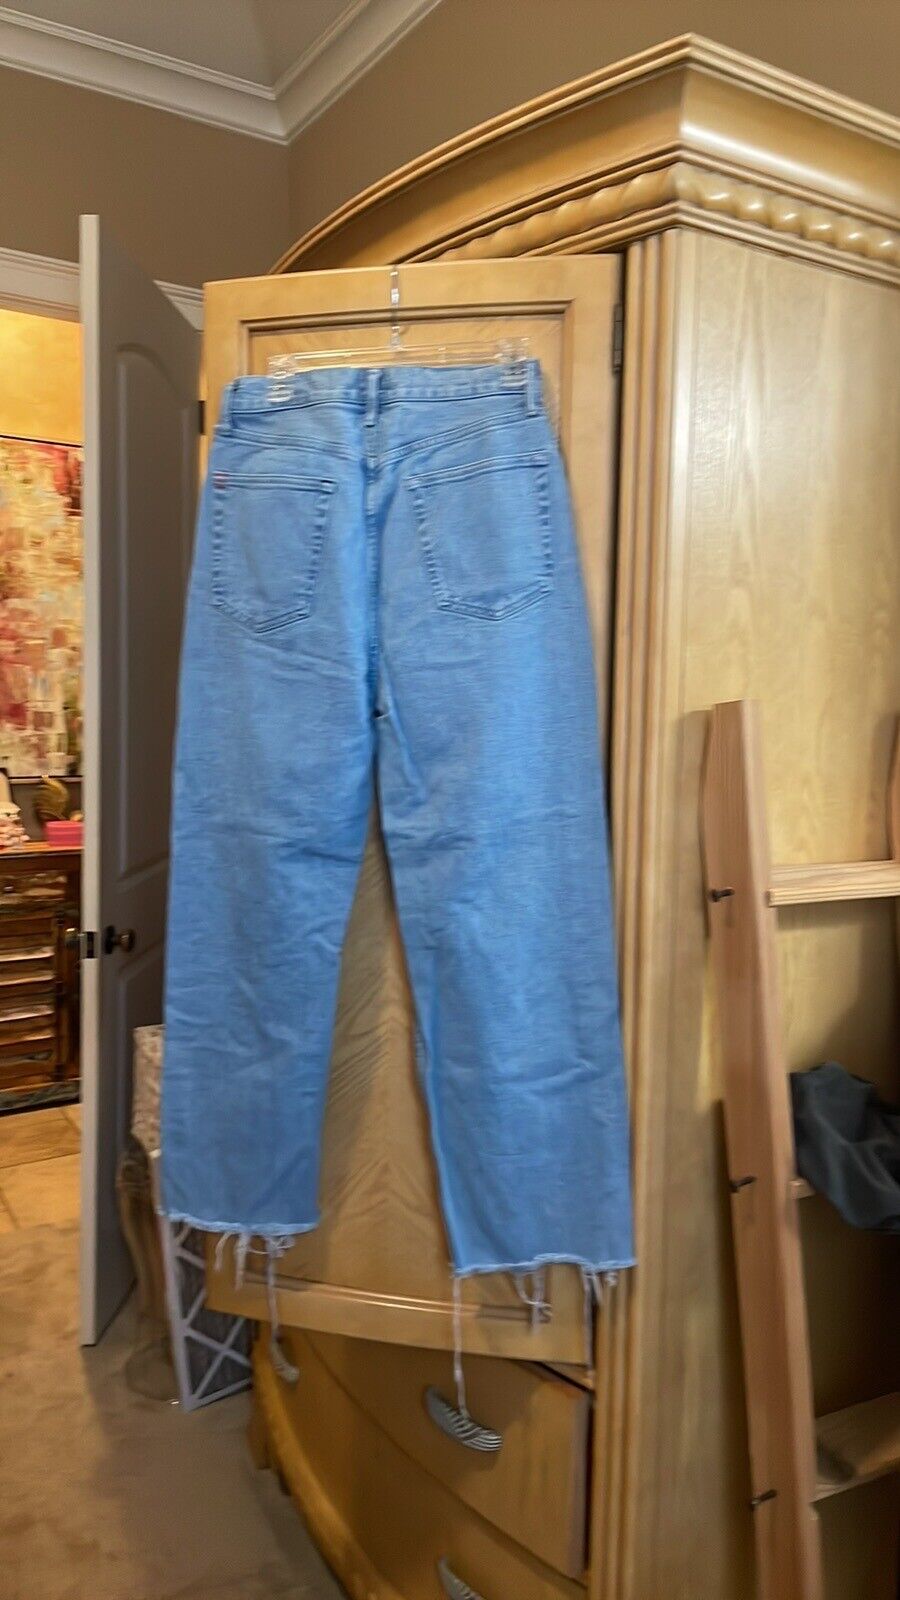 bdg jeans 29 High Waist - image 4